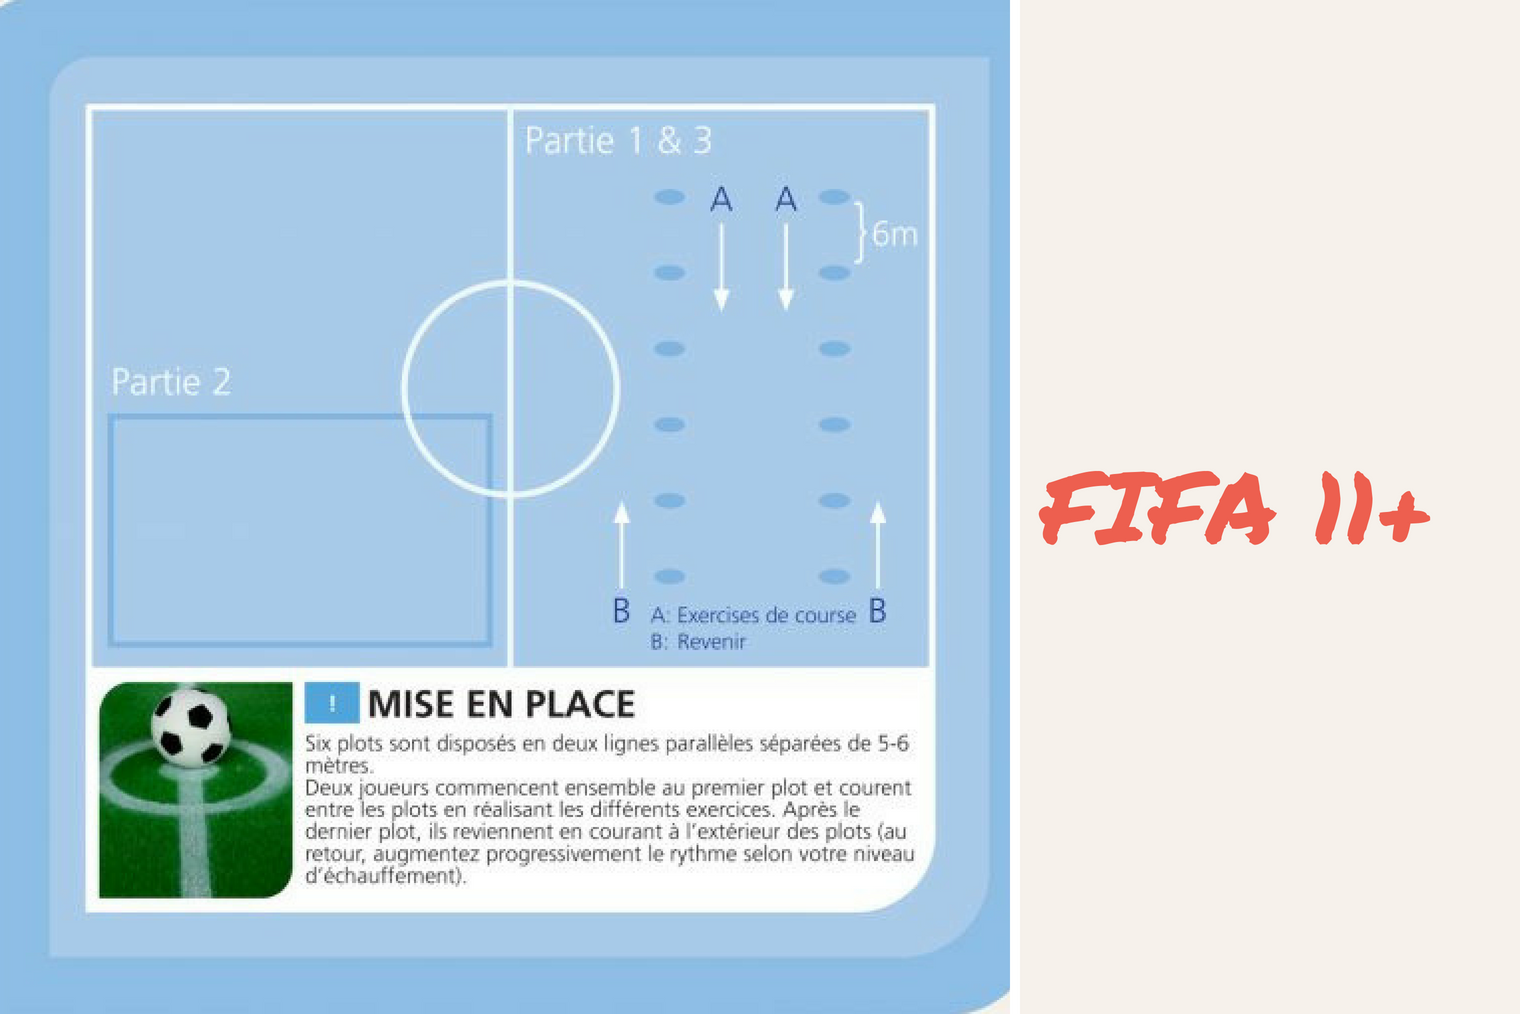 Fifa 11+ illustration